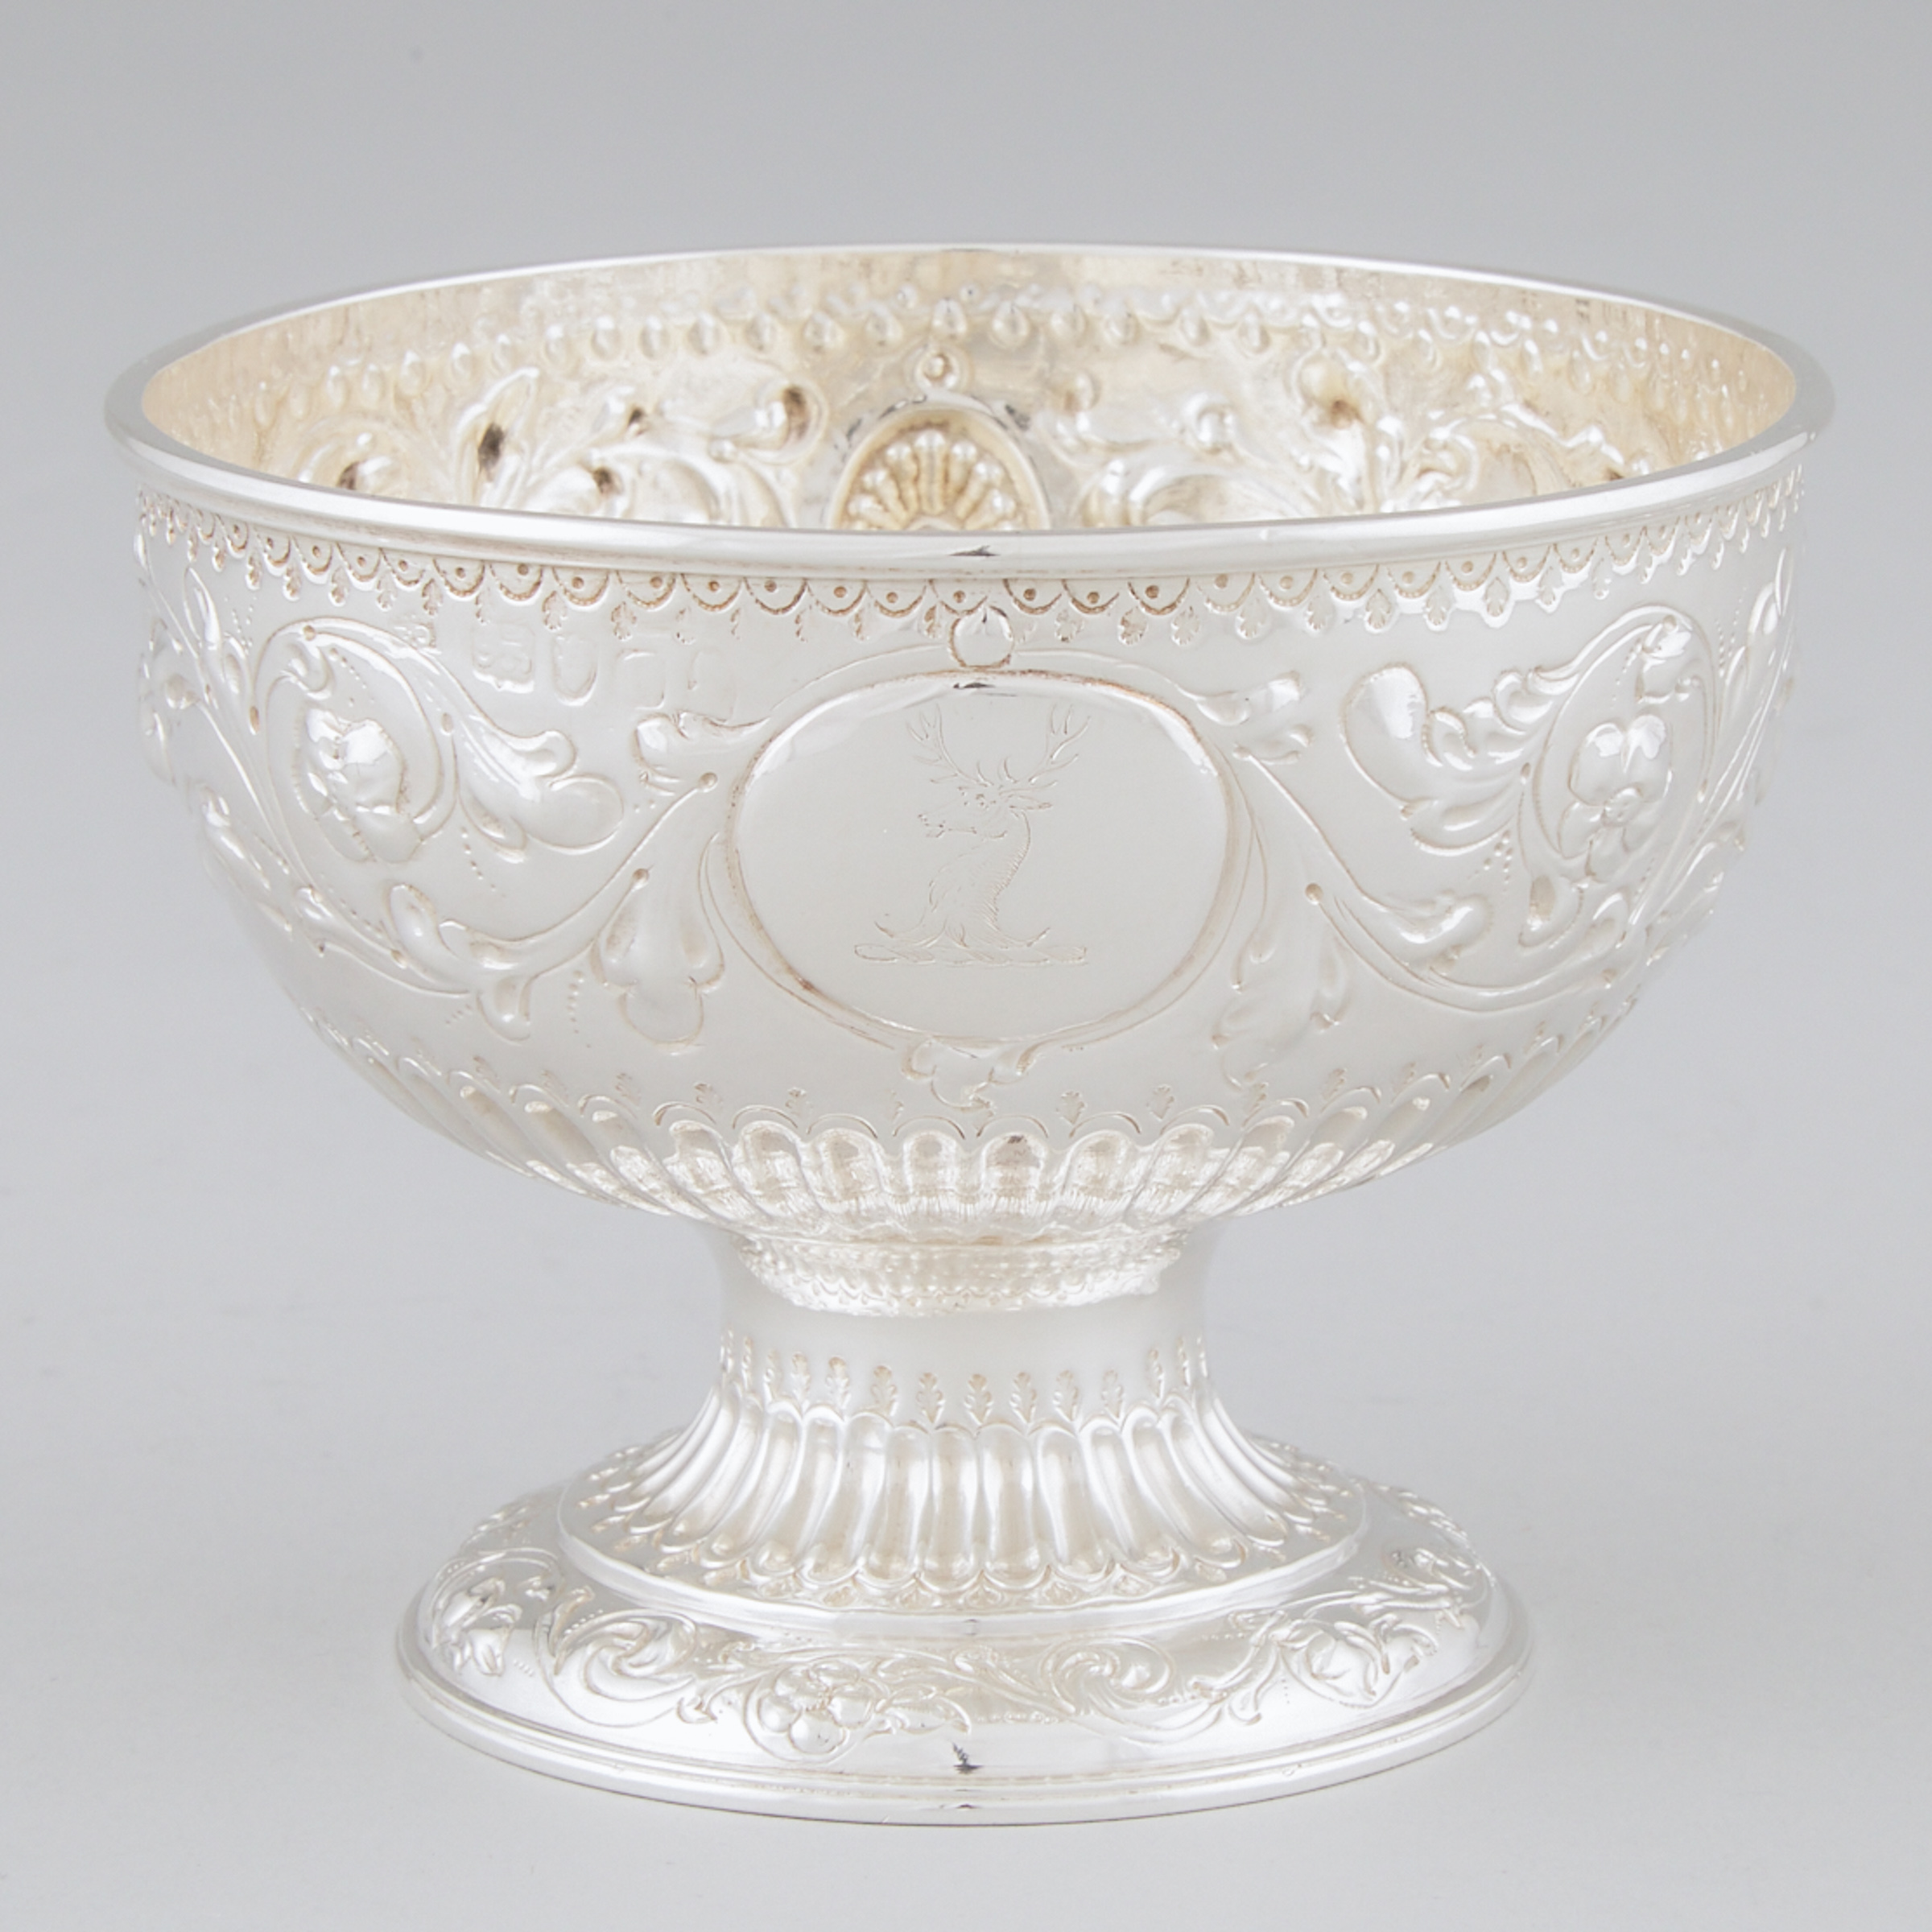 George III Silver Footed Sugar Bowl, London, 1790